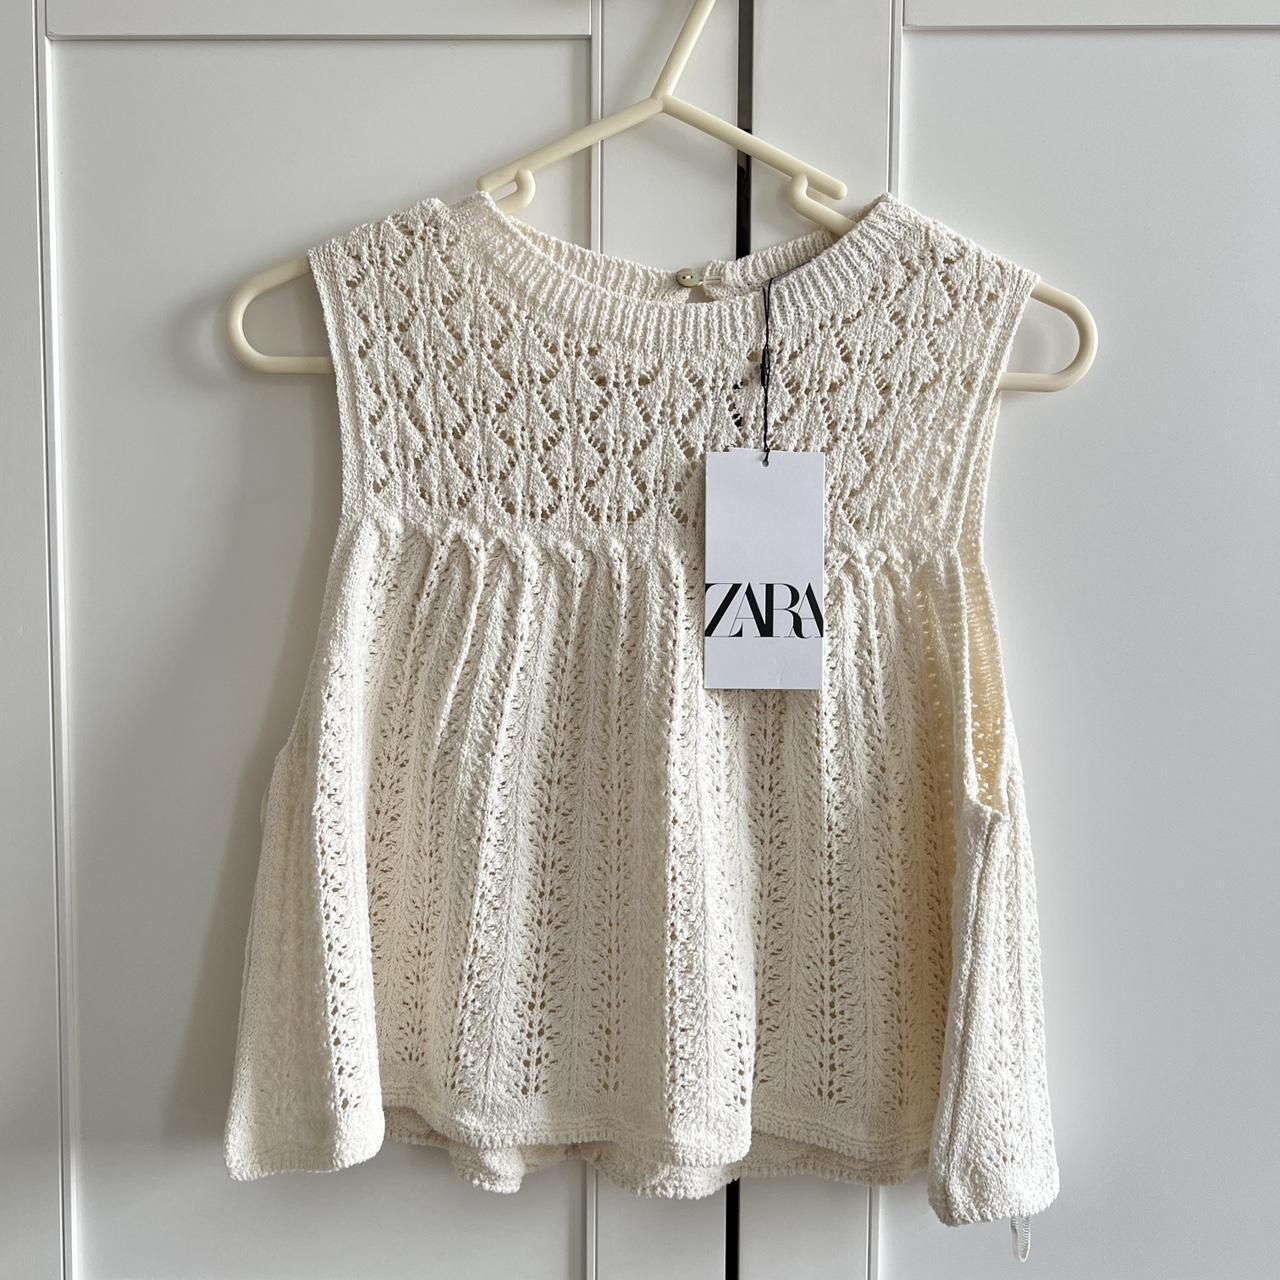 Zara cream pointelle knit top and skirt. Both size... - Depop